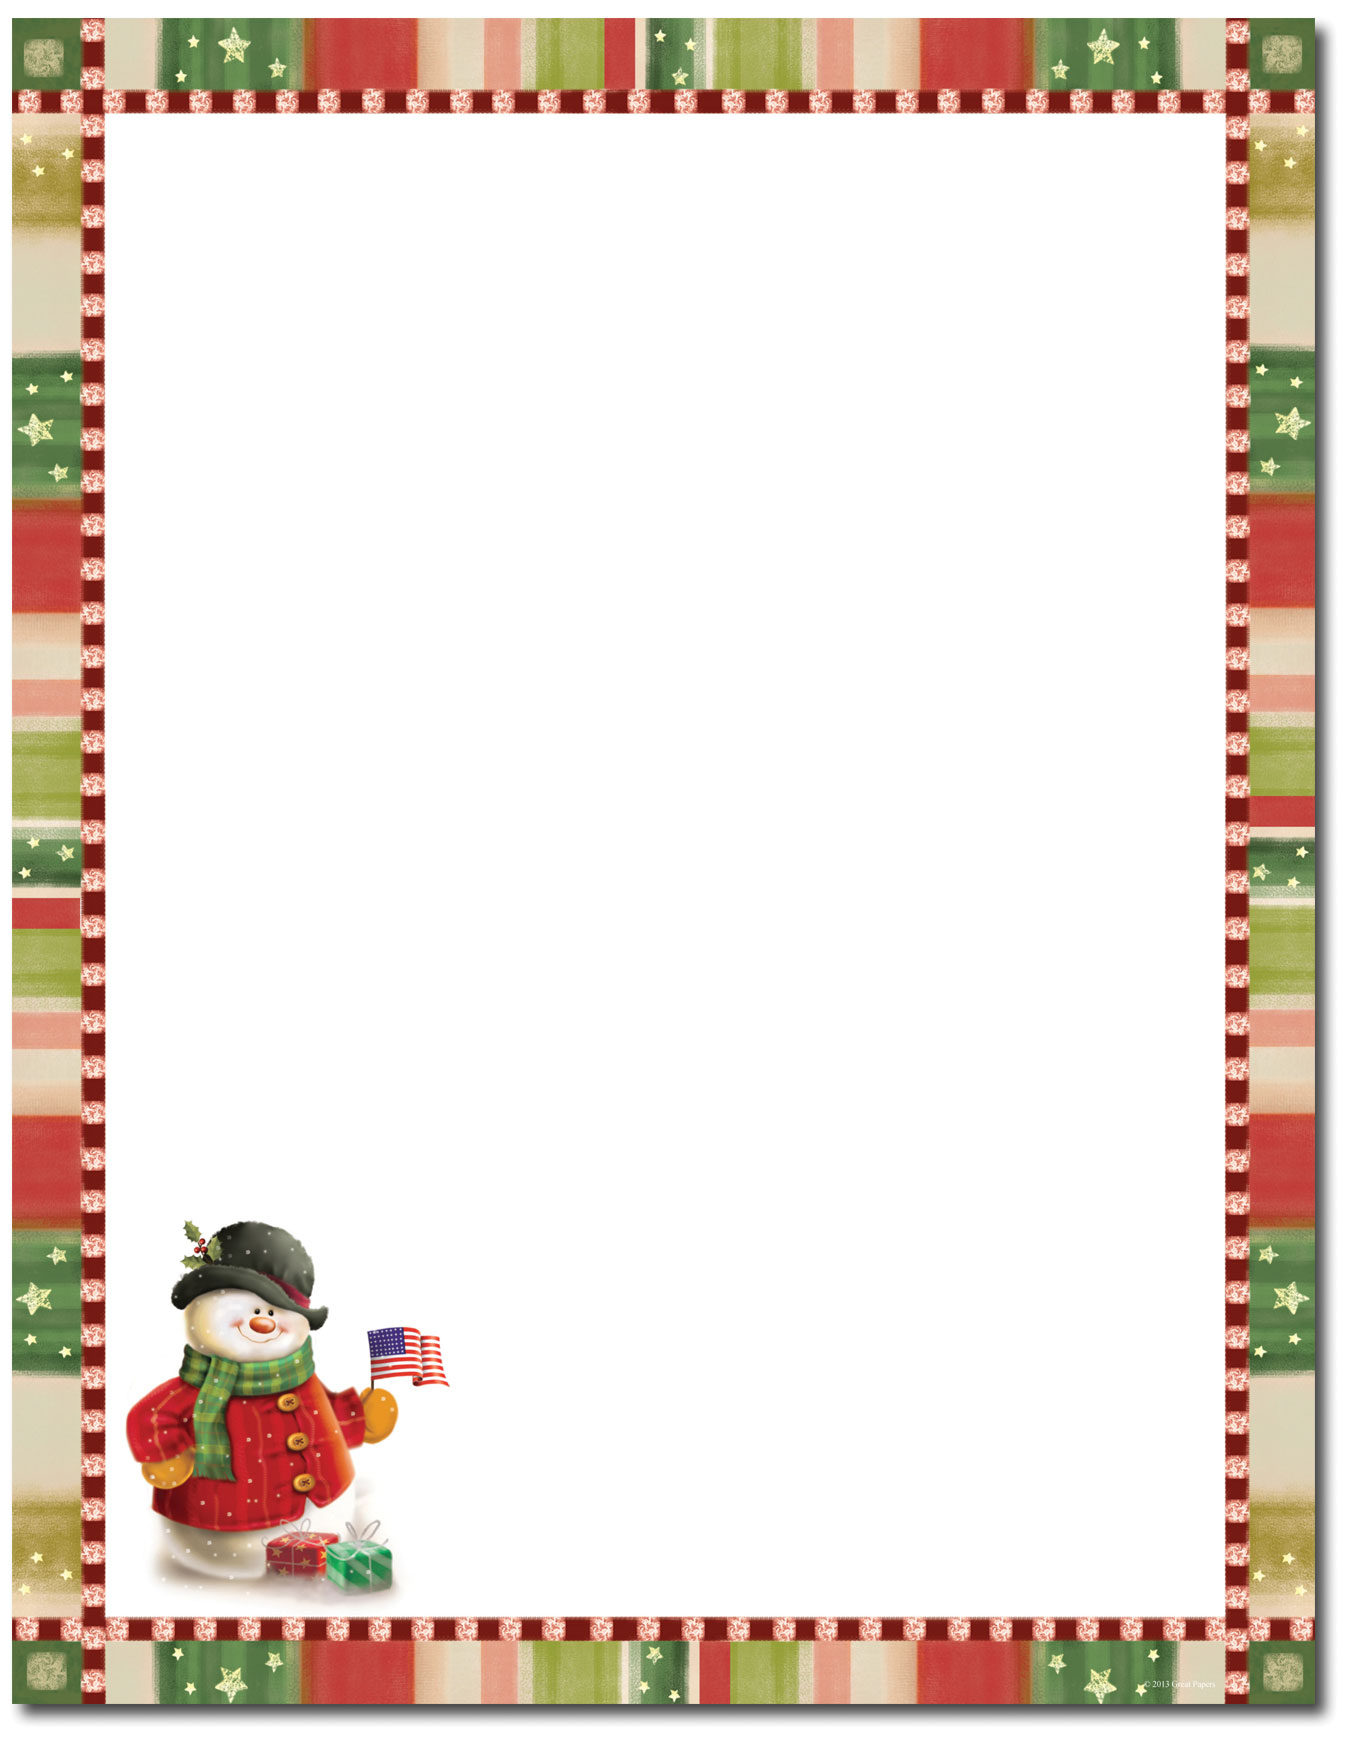 Free Printable Christmas Stationery Borders - Free Printable Christmas Stationery Borders